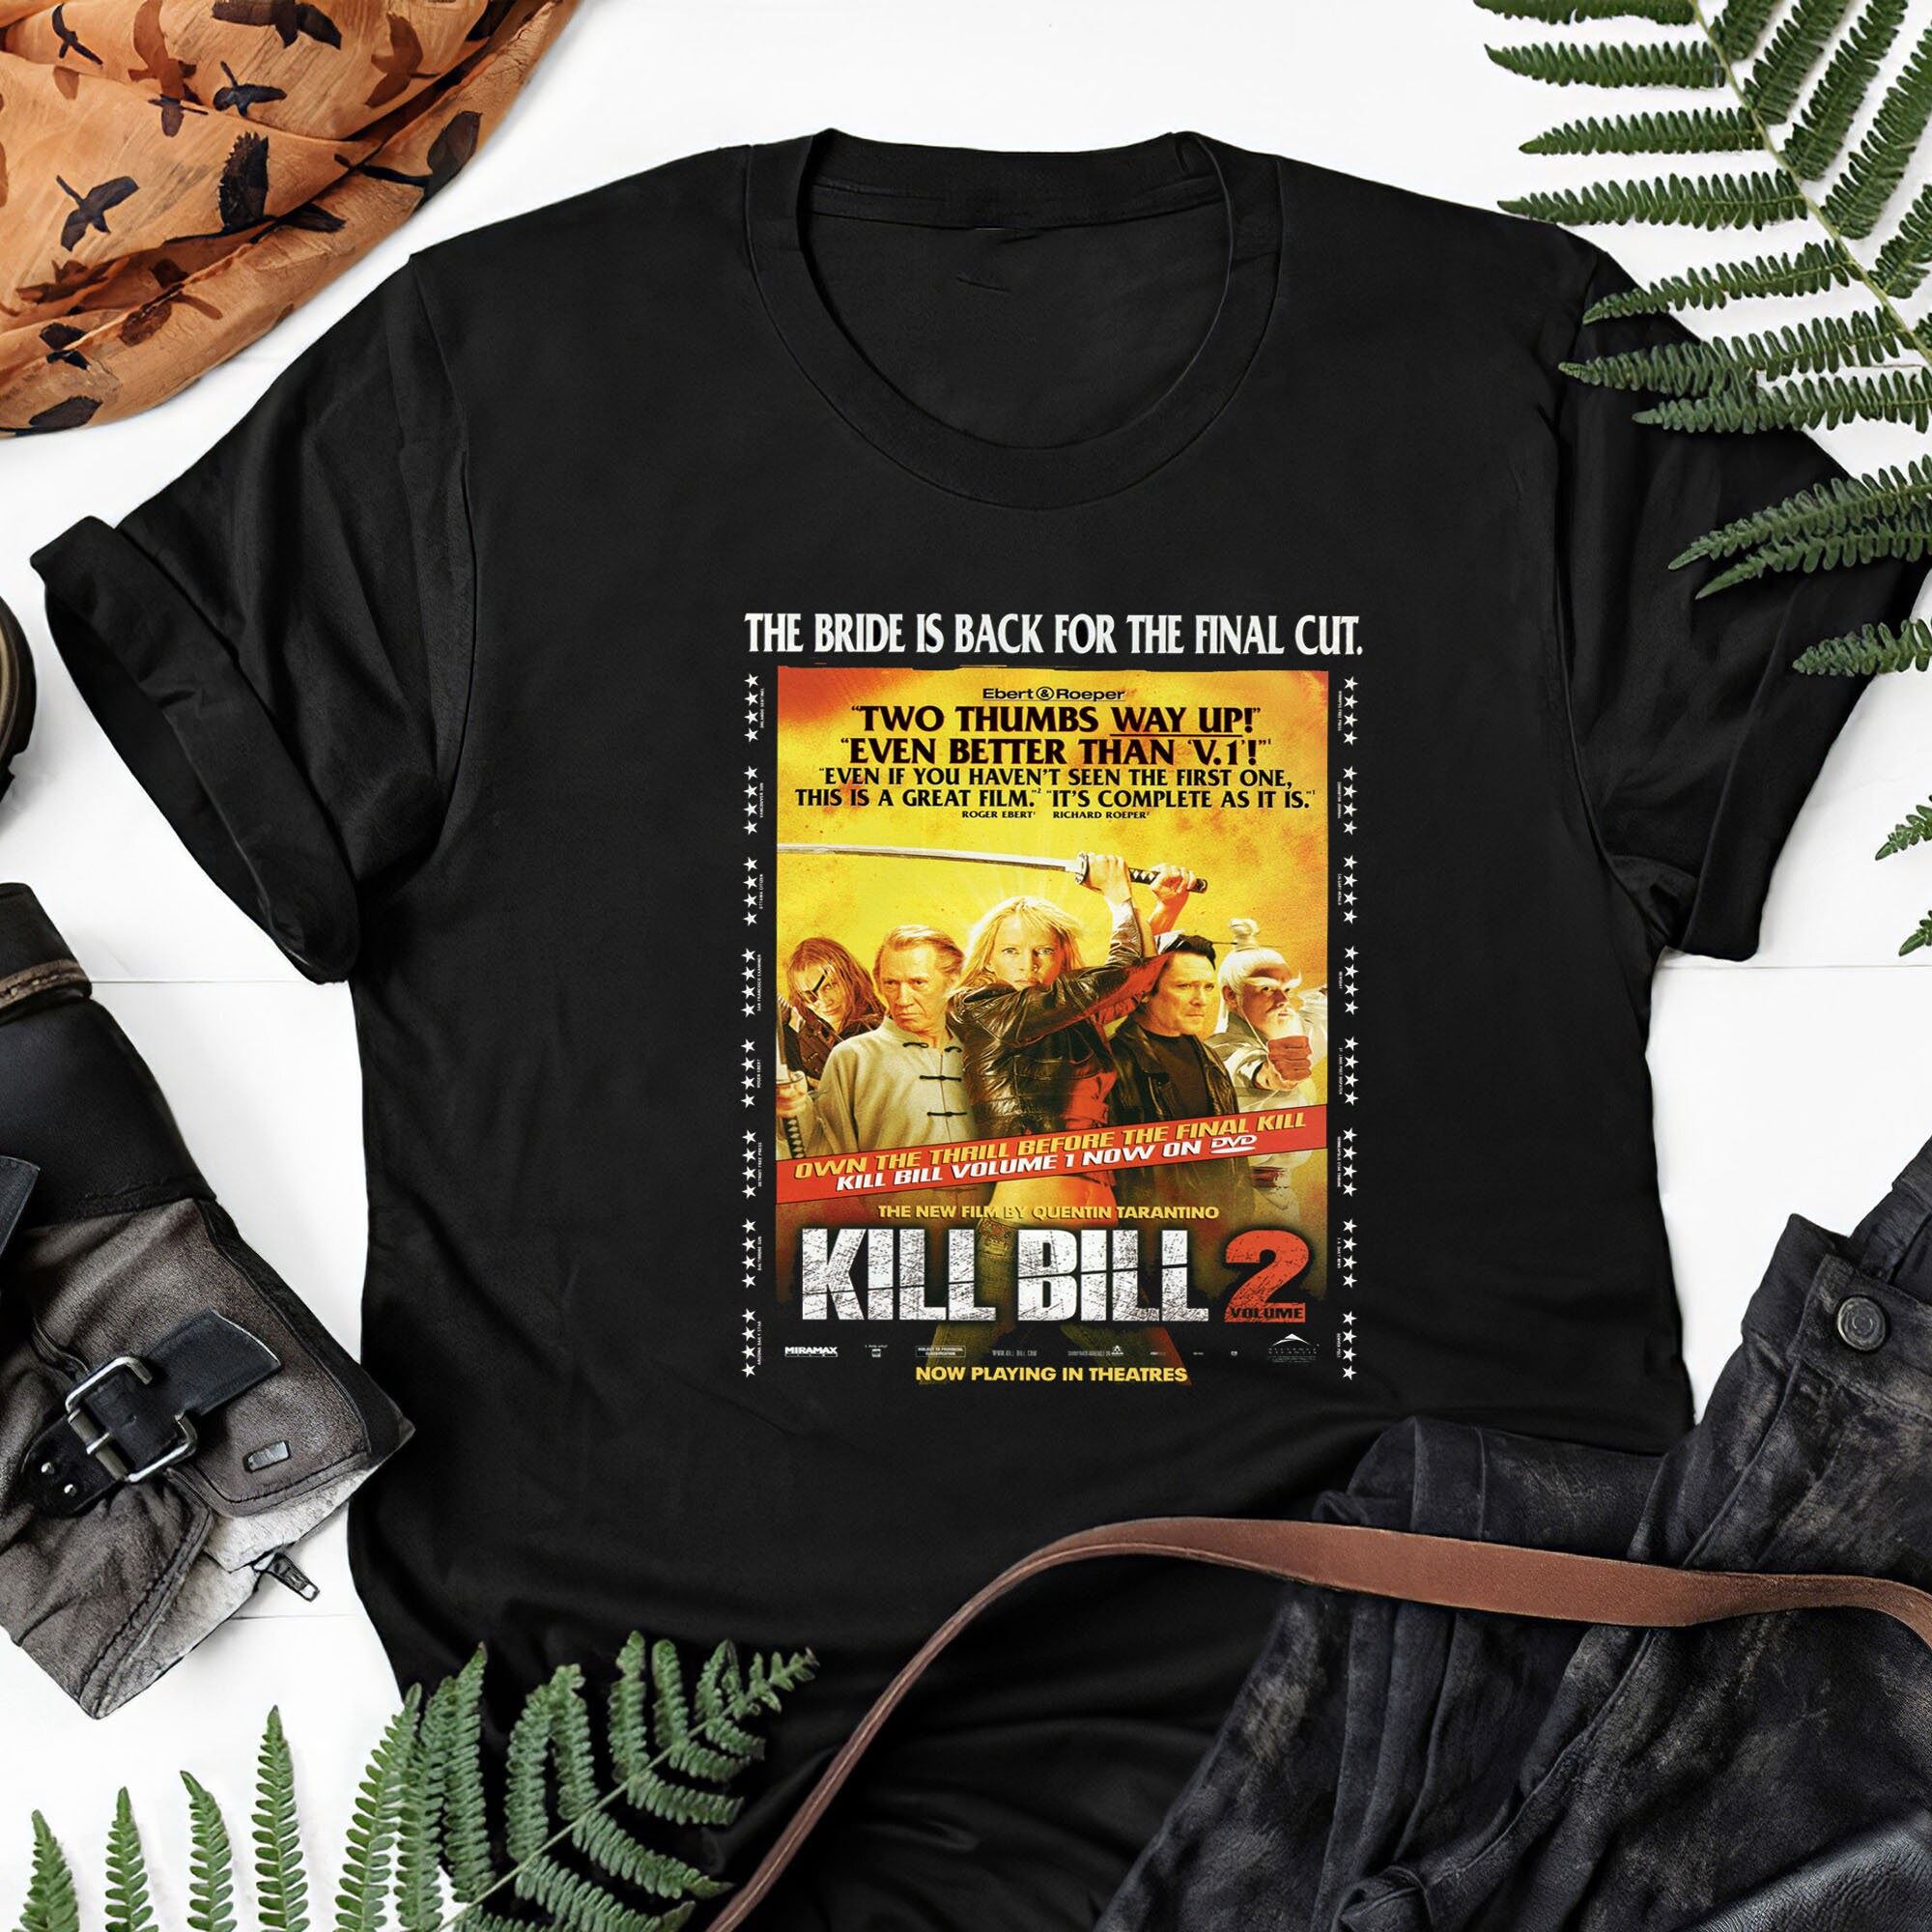 Kill Bill Vol 2 Movie Poster Quentin Taratino Kung Fu Gift Tee For Men Women Unisex T-shirt